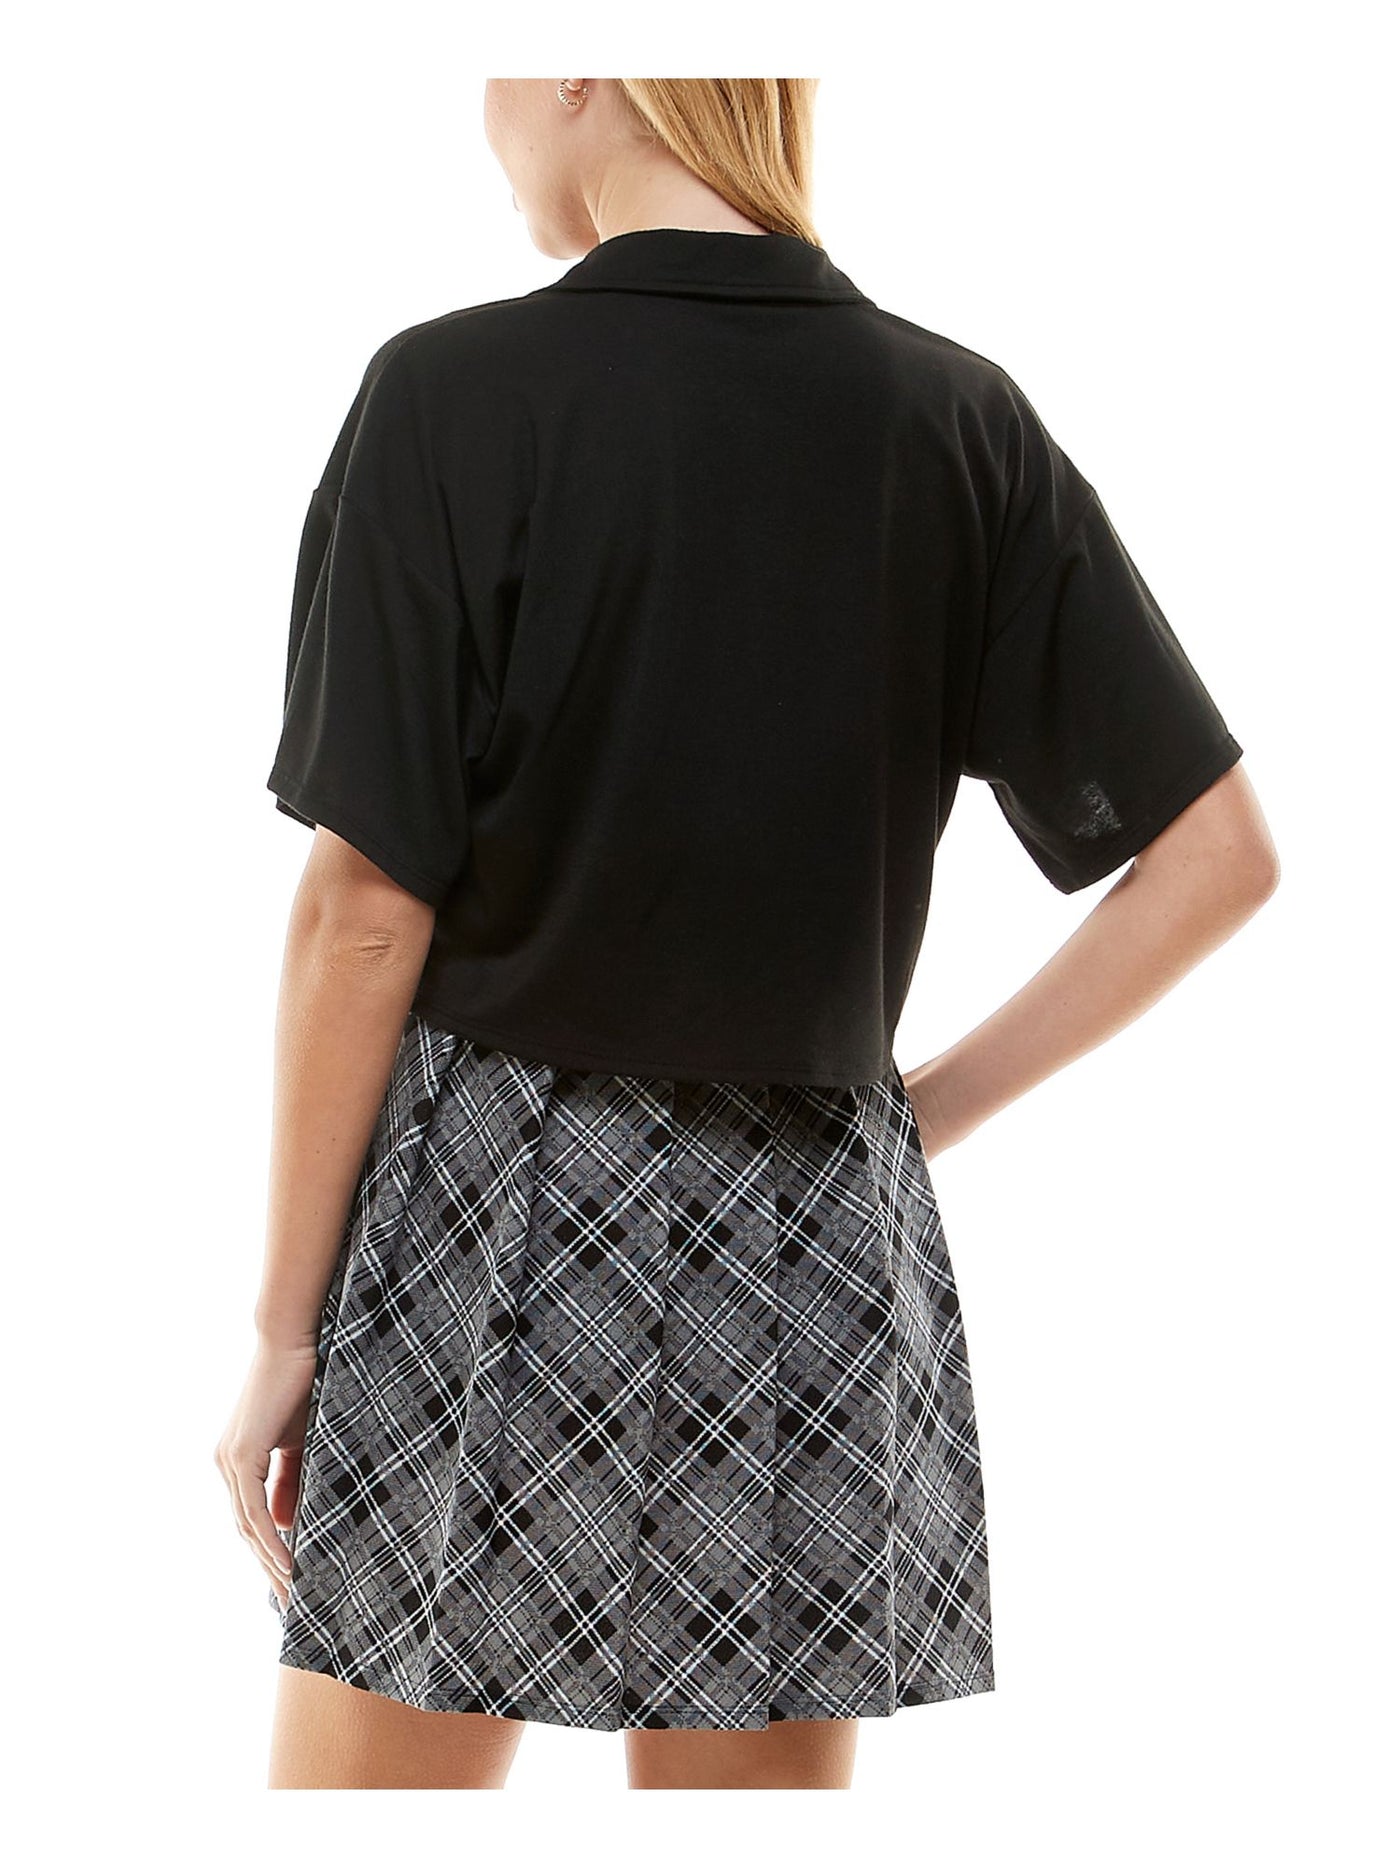 KINGSTON GREY Womens Black Short Sleeve Collared Crop Top Juniors S